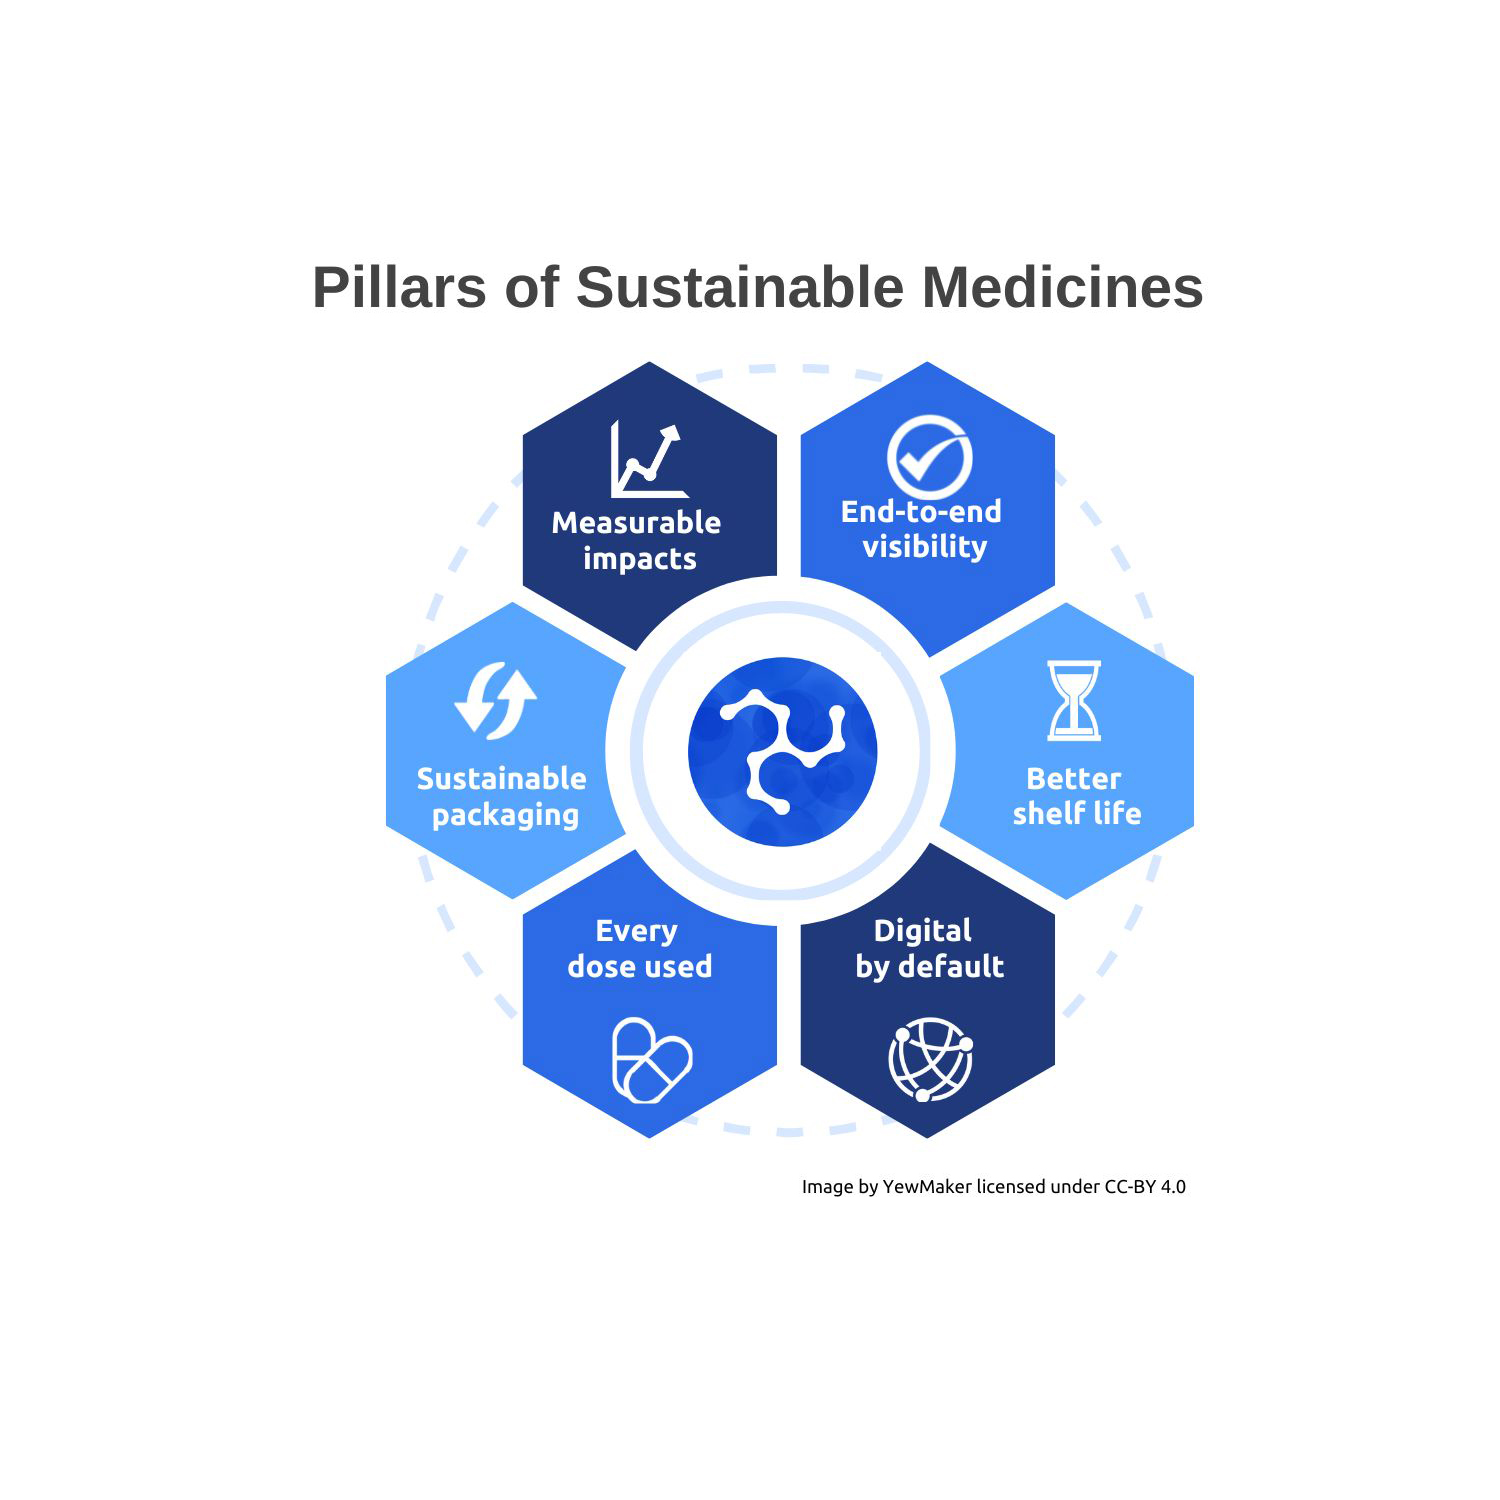 Pillars of Sustainable Medicines